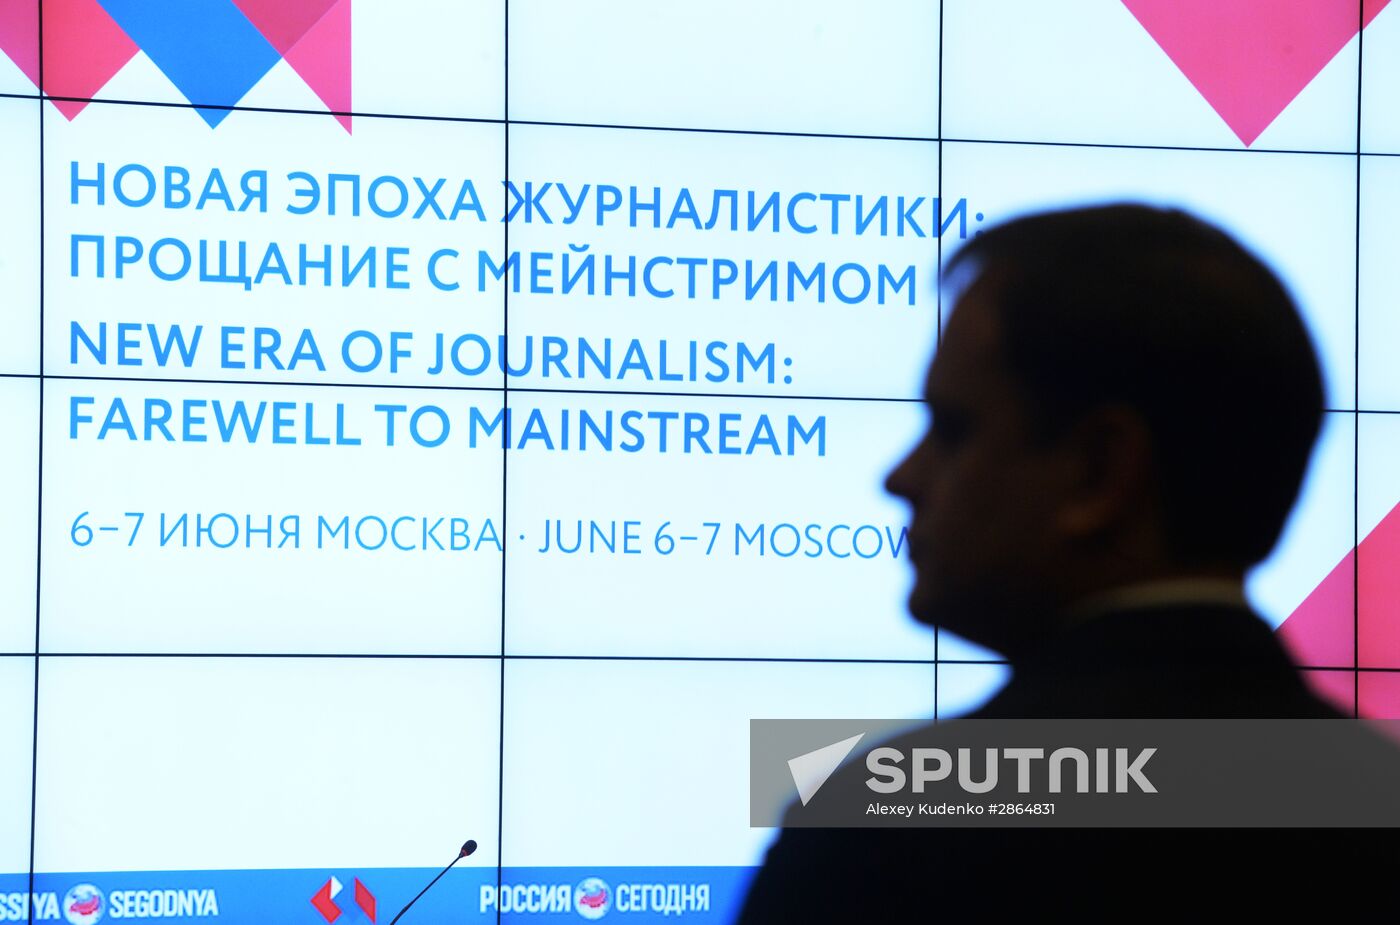 Forum "The New Era of Journalism: Farewell to Mainstream"